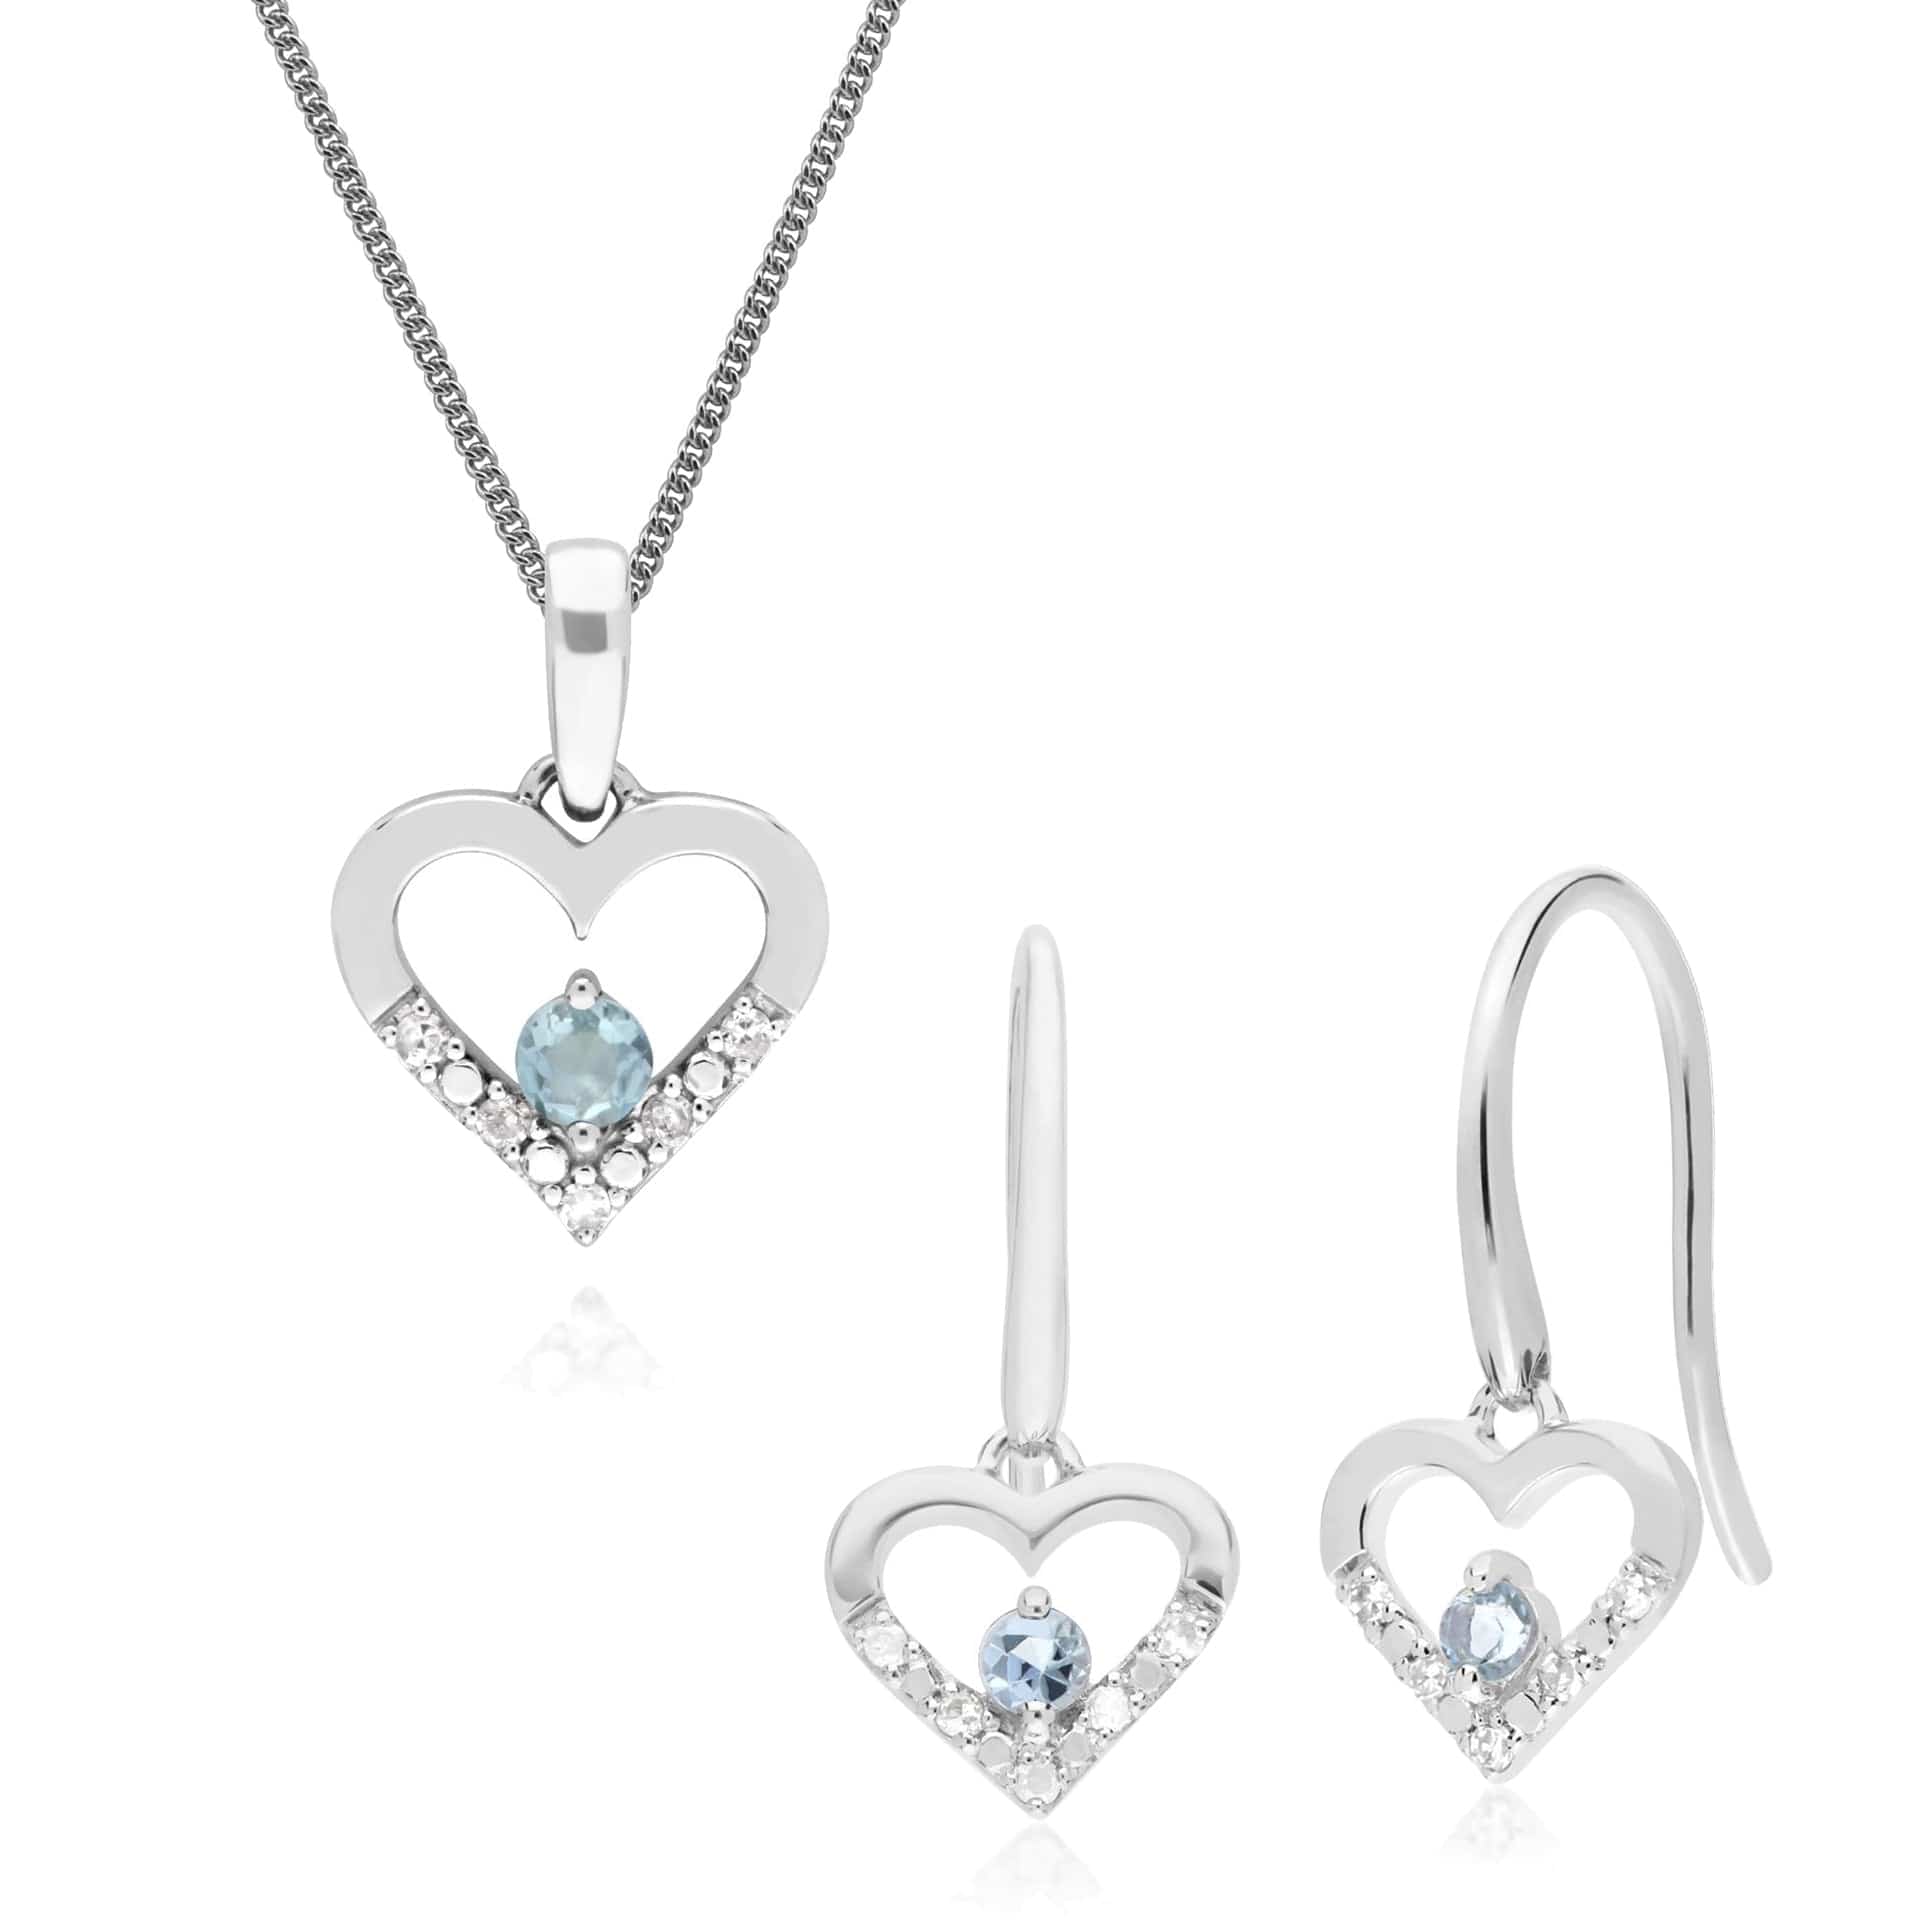 162E0258059-162P0219059 Classic Round Aquamarine & Diamond Heart Drop Earrings & Pendant Set in 9ct White Gold 1